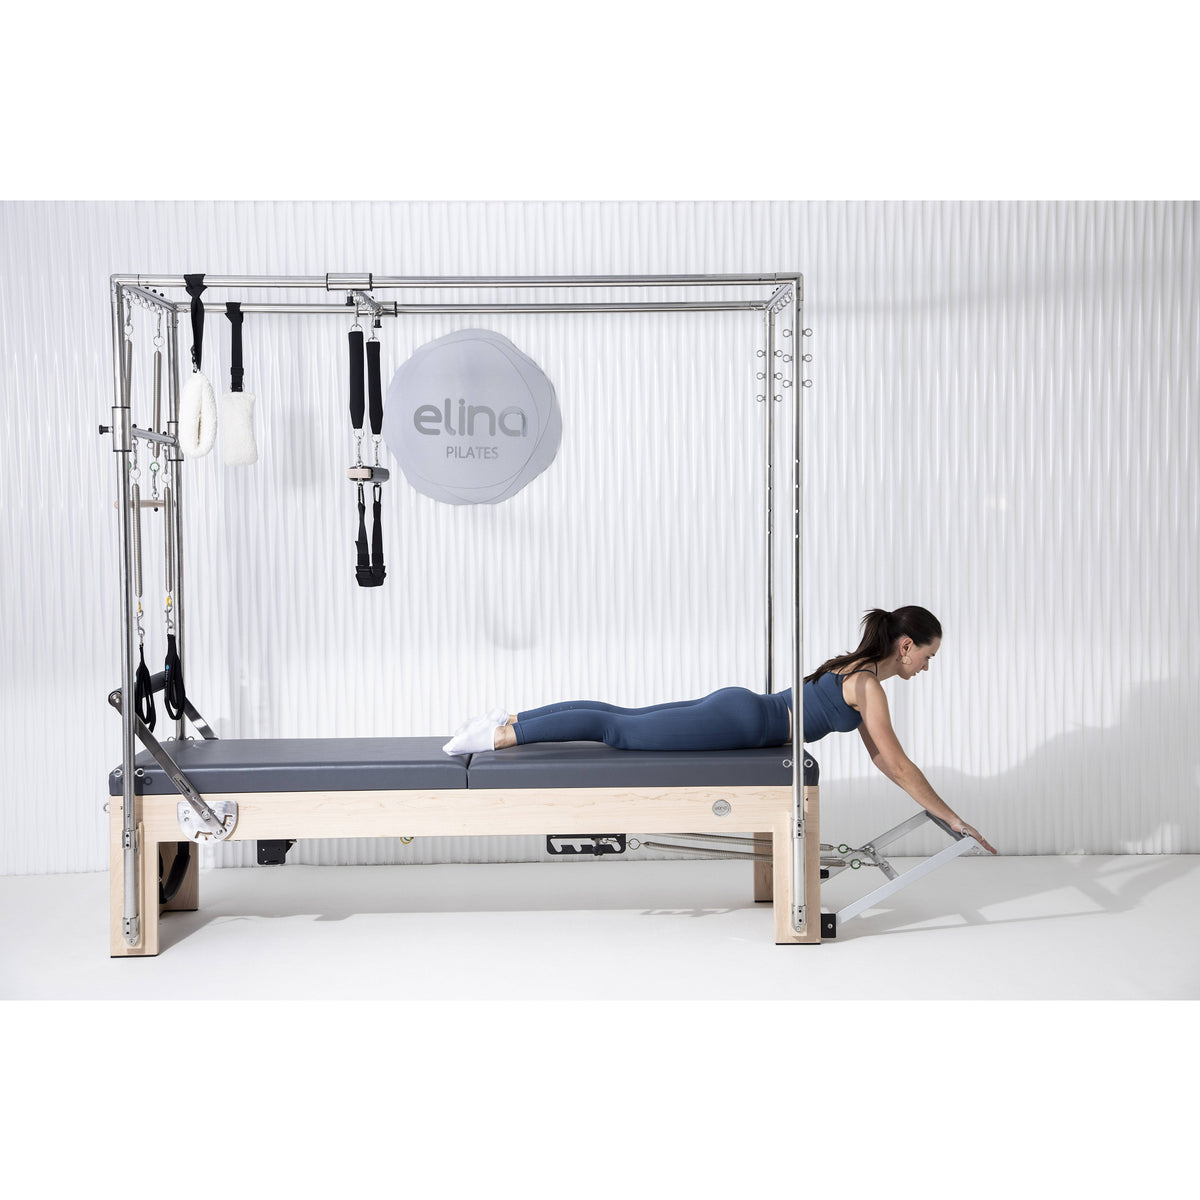 Elina Pilates Elite Ladder Barrel — Recovery For Athletes